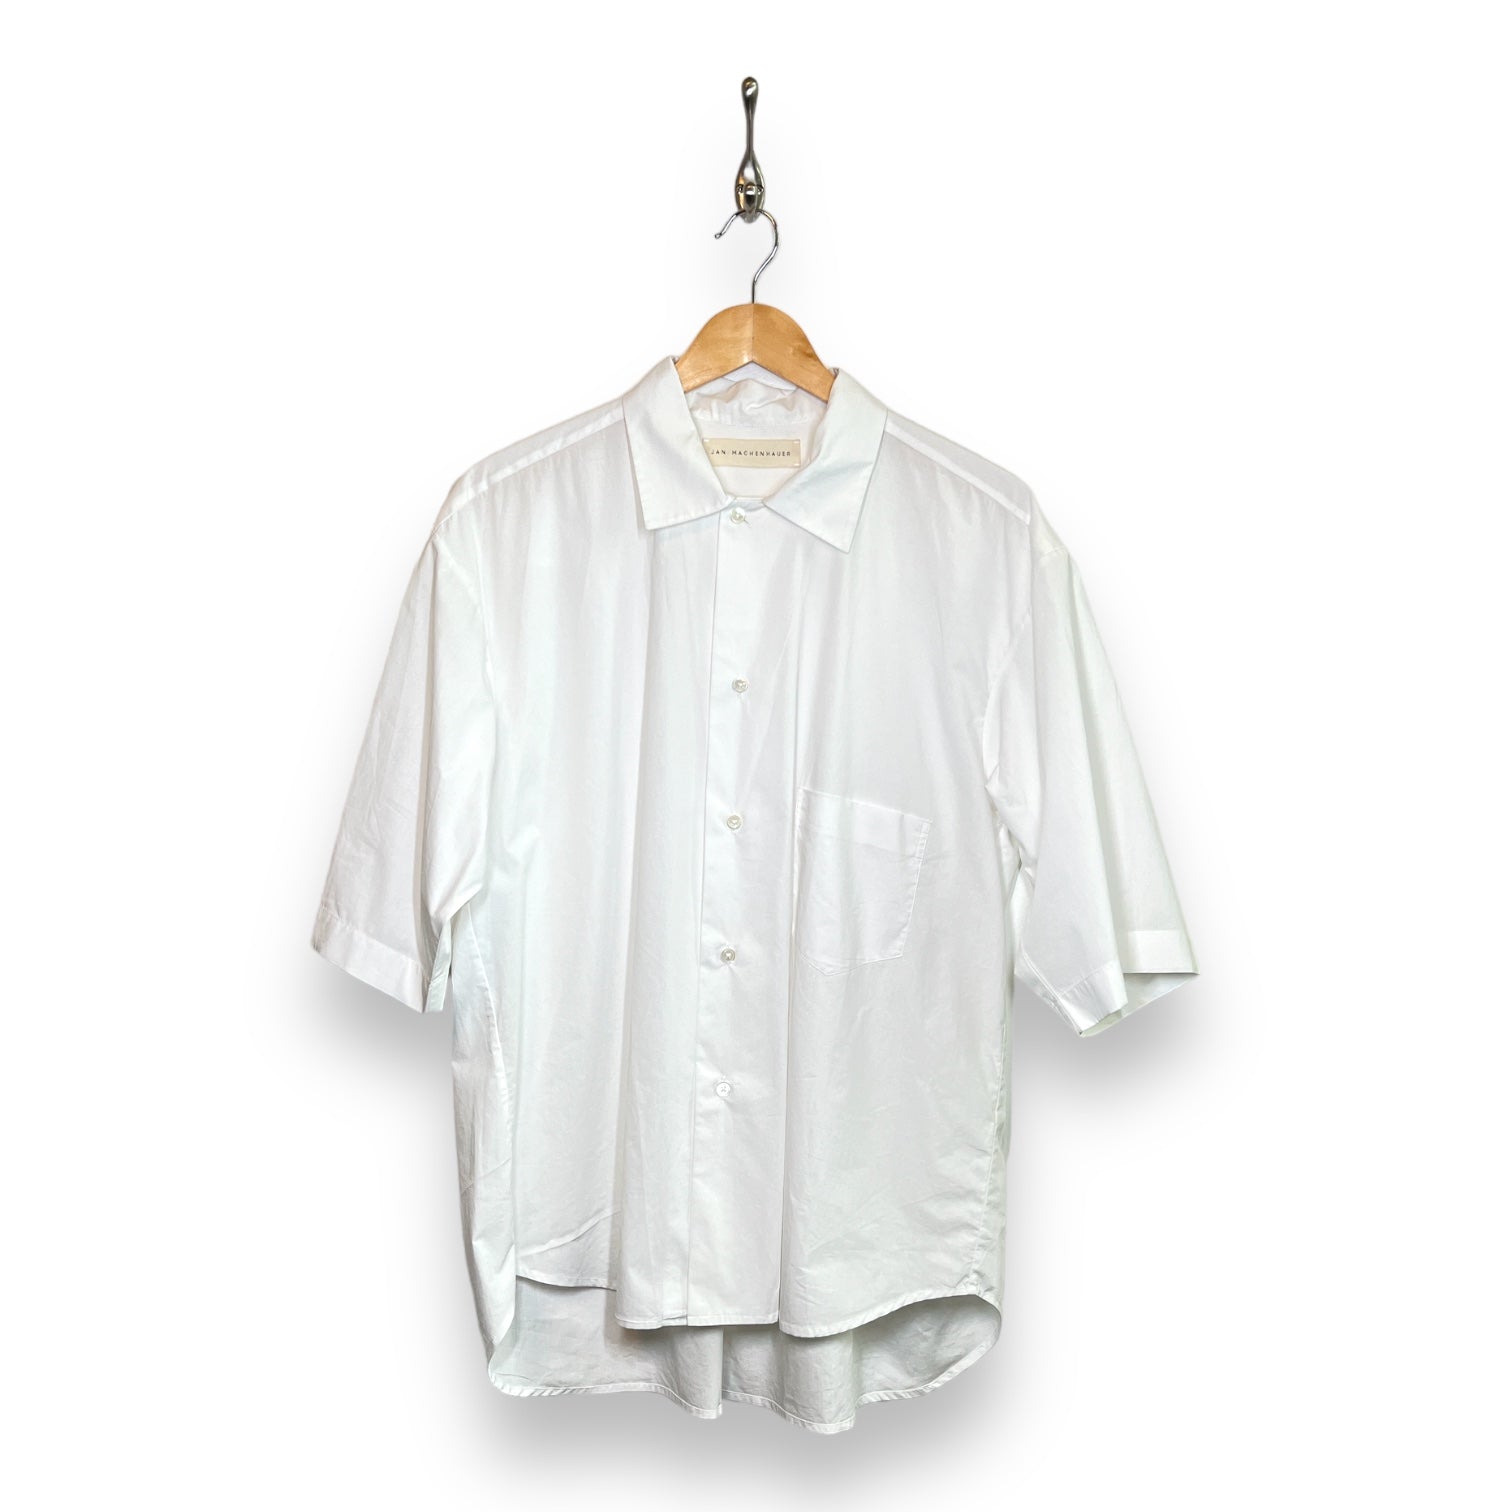 Jan Machenhauer Fred Oversize Shirt poplin/white